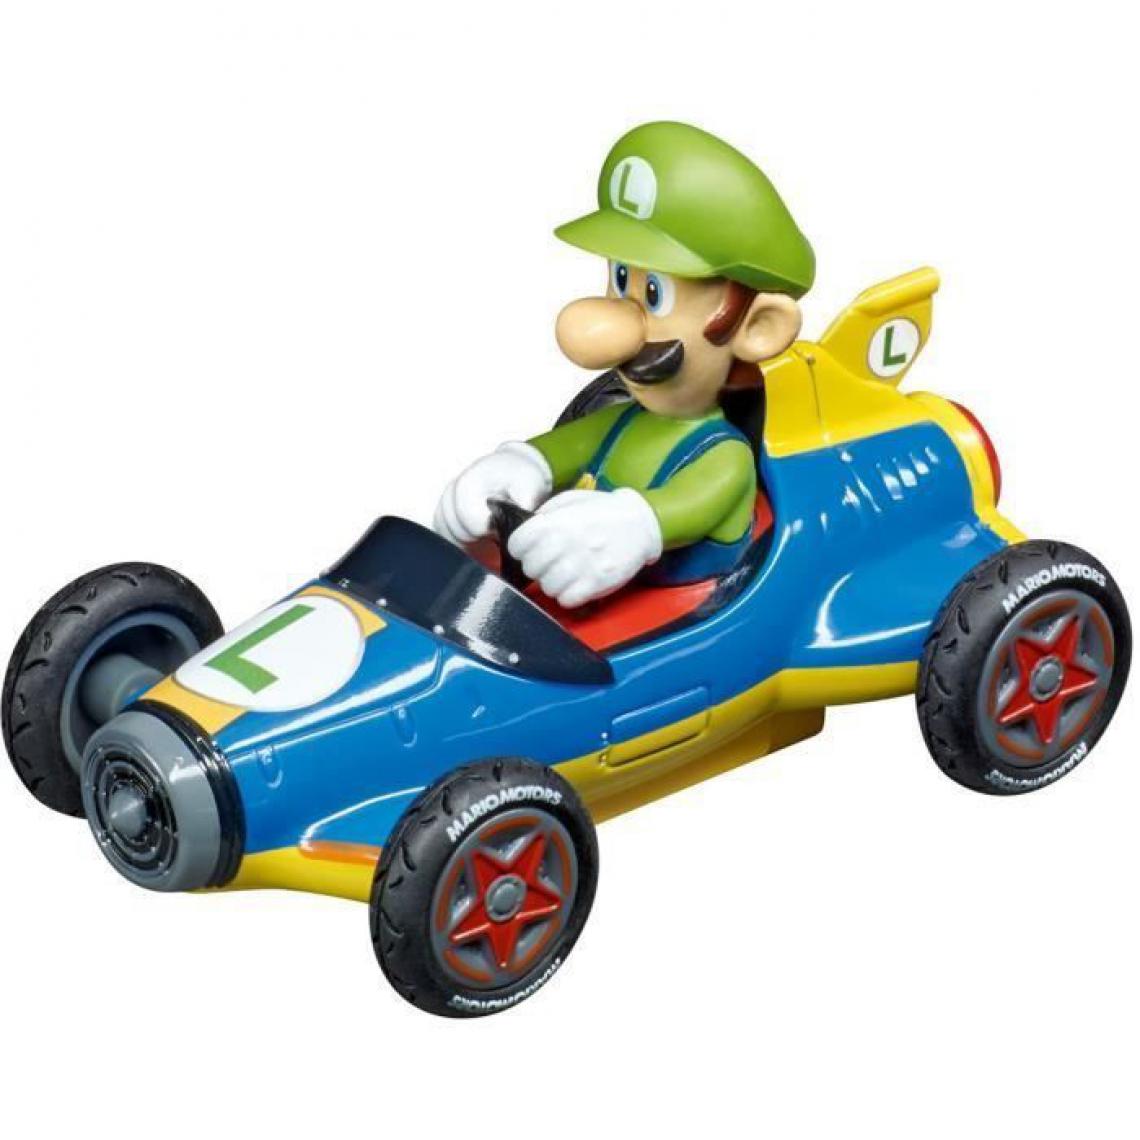 Carrera Montres - Carrera Go!!! Nintendo Mario KartTM 8 - Mach 8 - Luigi - Circuits